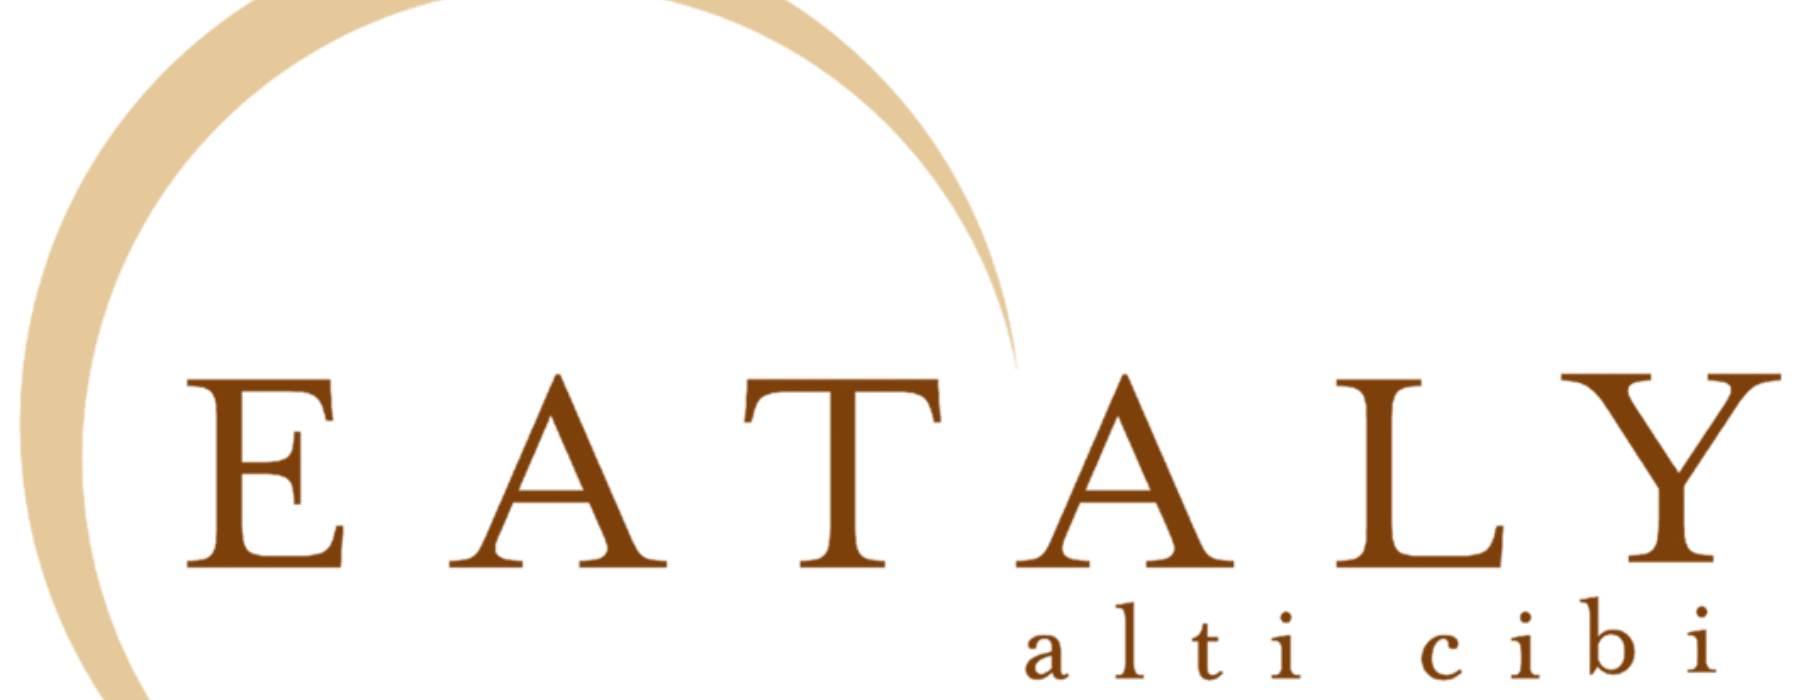 Logo Eataly